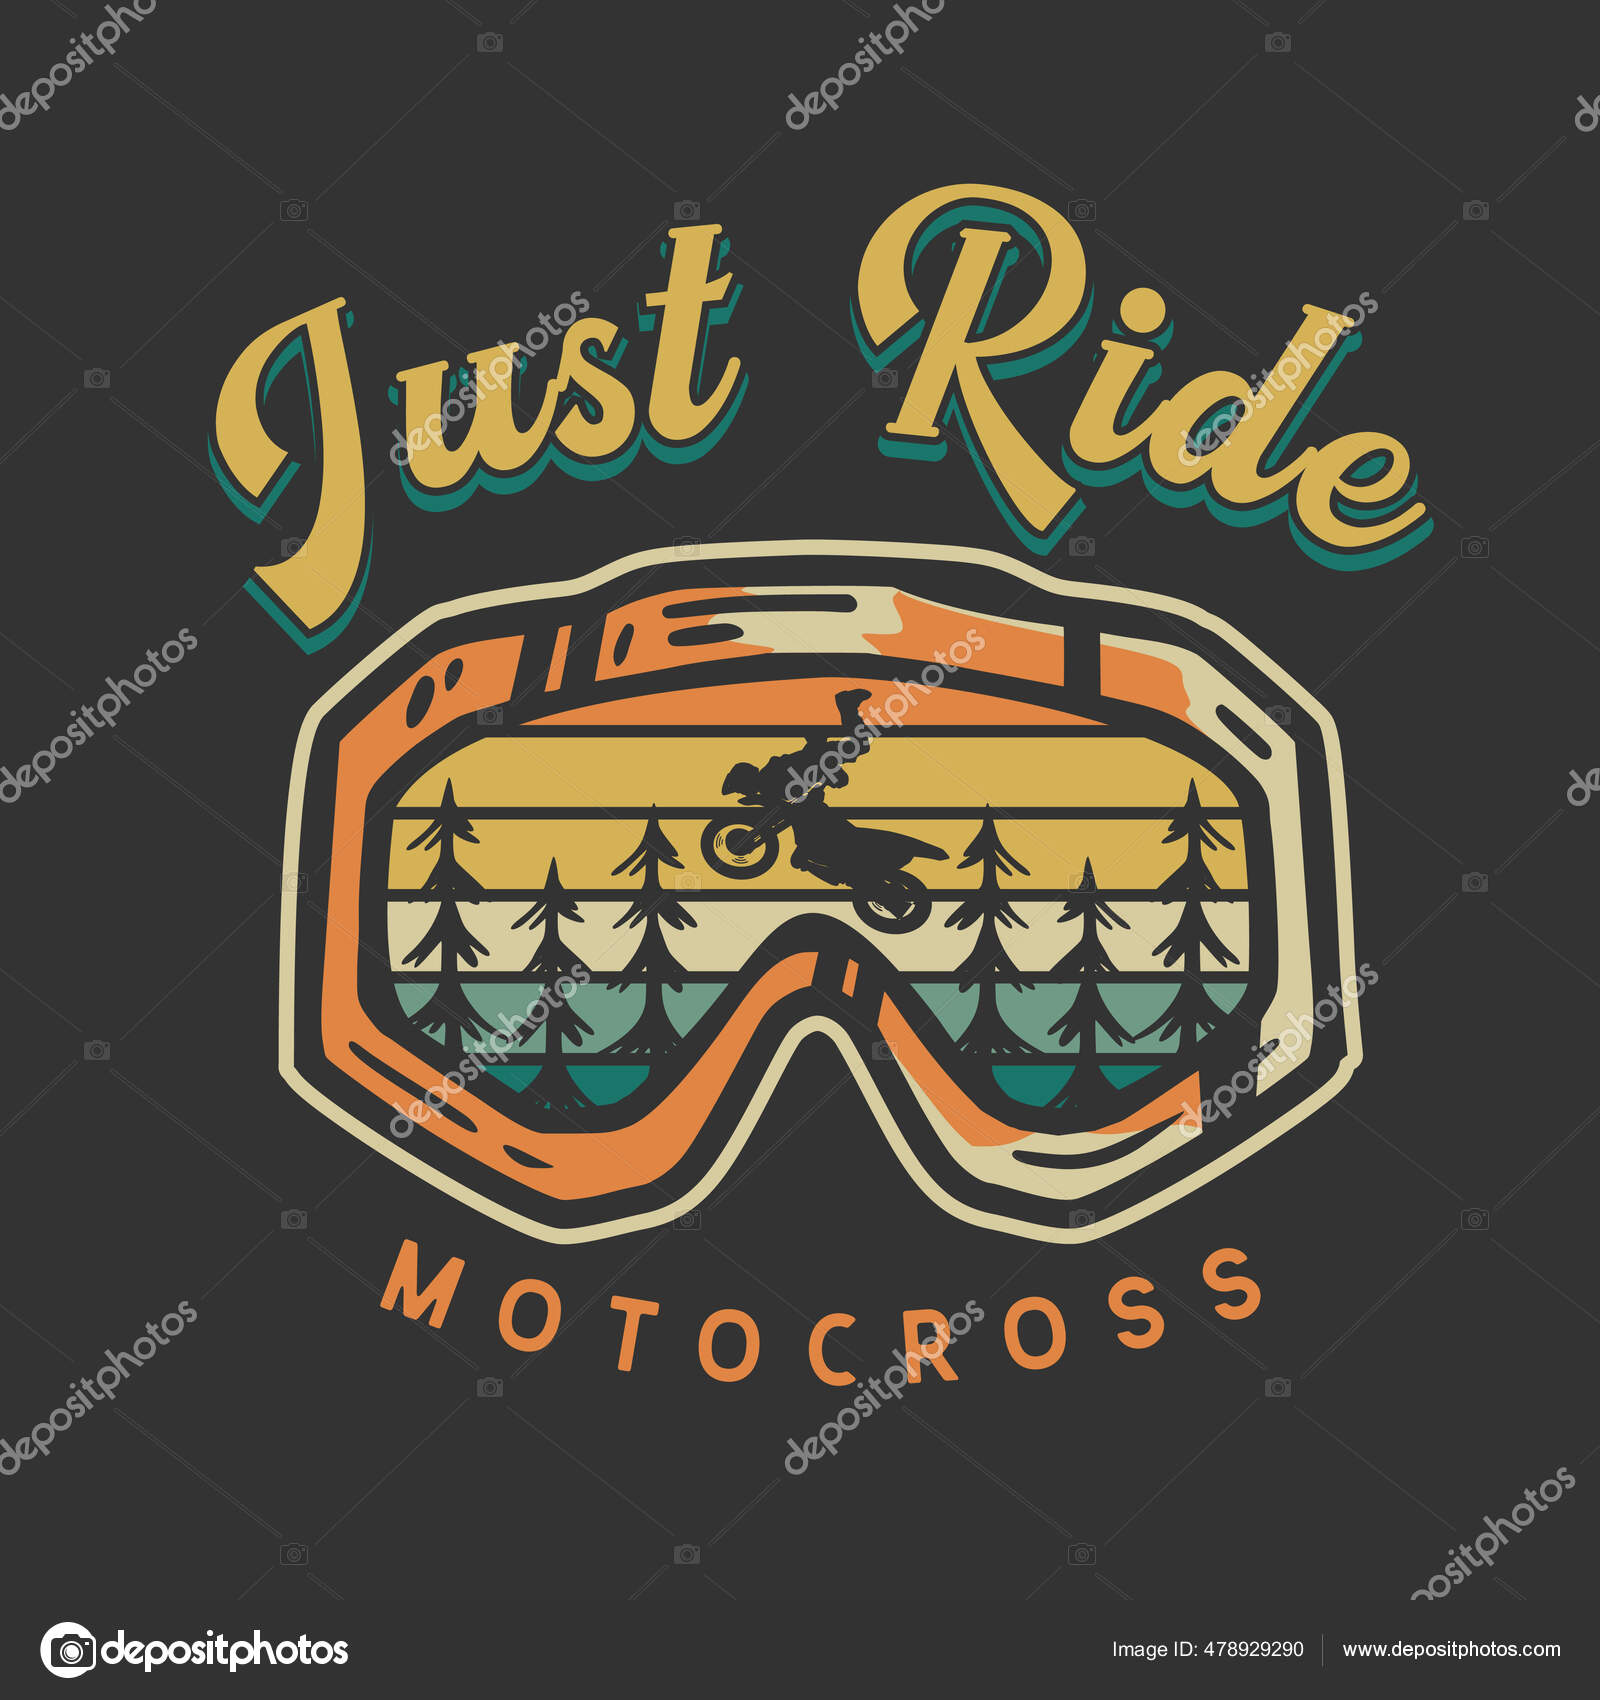 https://st2.depositphotos.com/30037272/47892/v/1600/depositphotos_478929290-stock-illustration-logo-design-just-ride-motocross.jpg